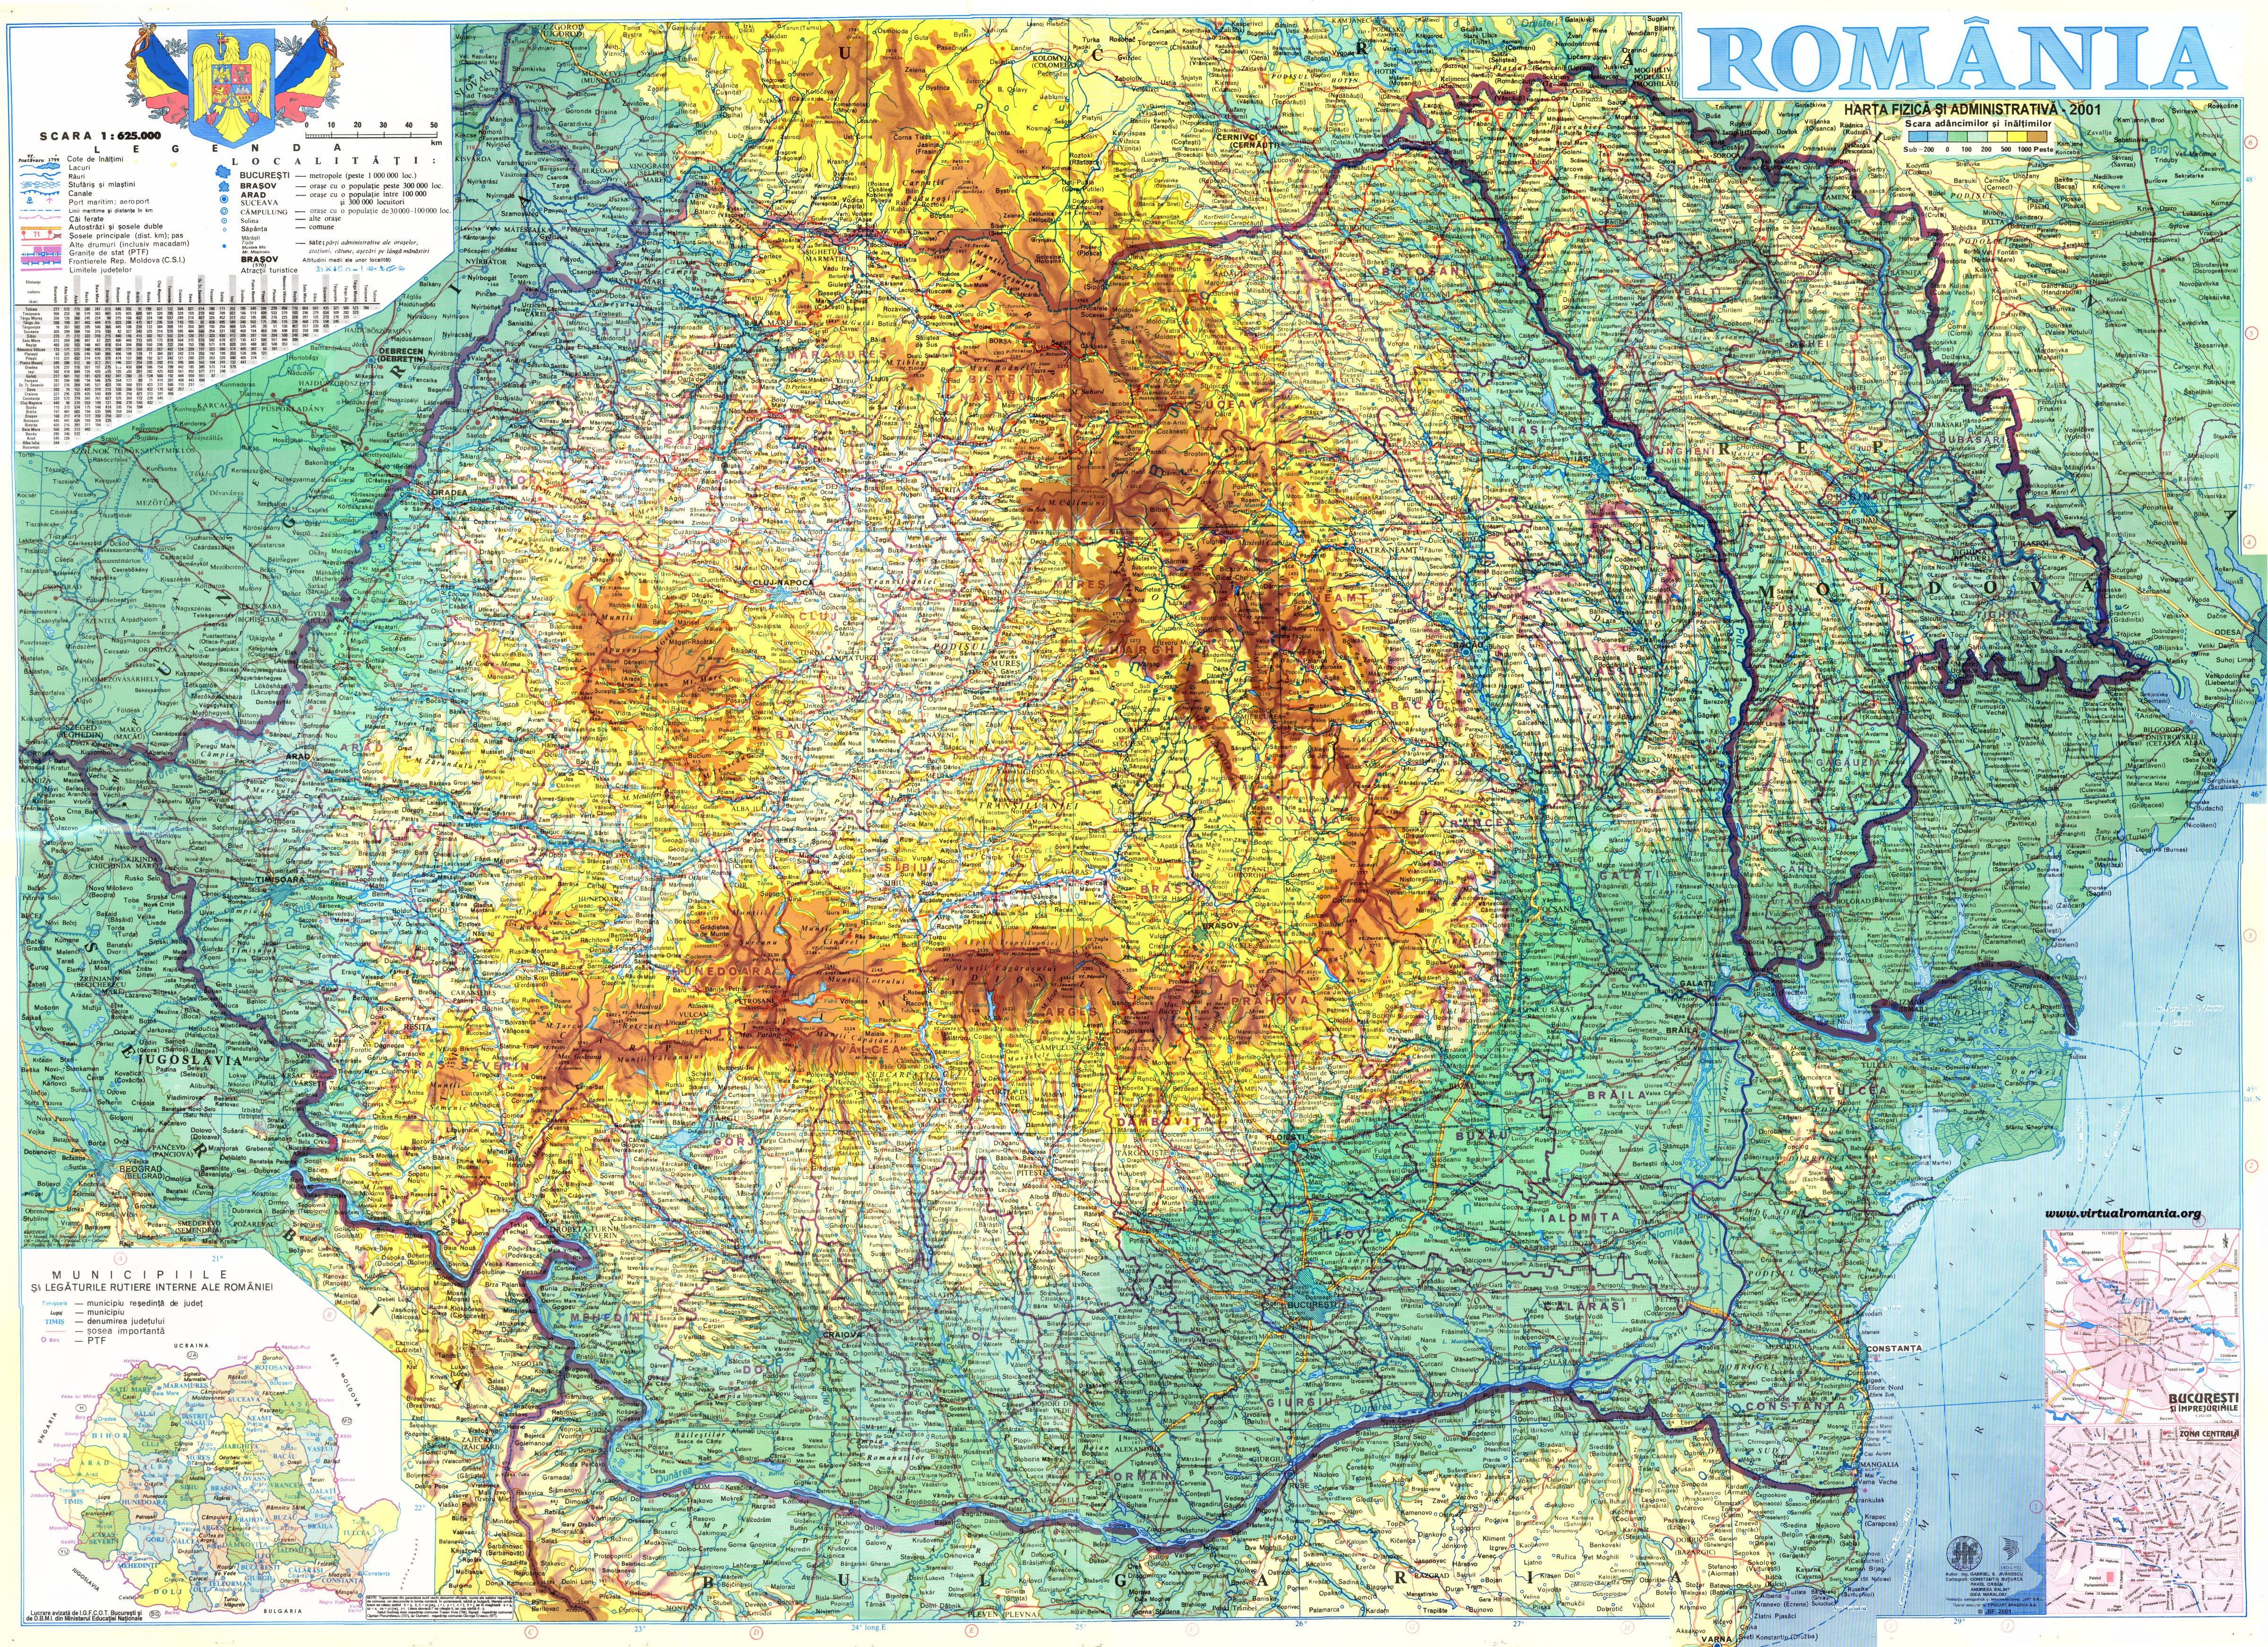 domborzati térkép románia Virtual Romania Maps domborzati térkép románia